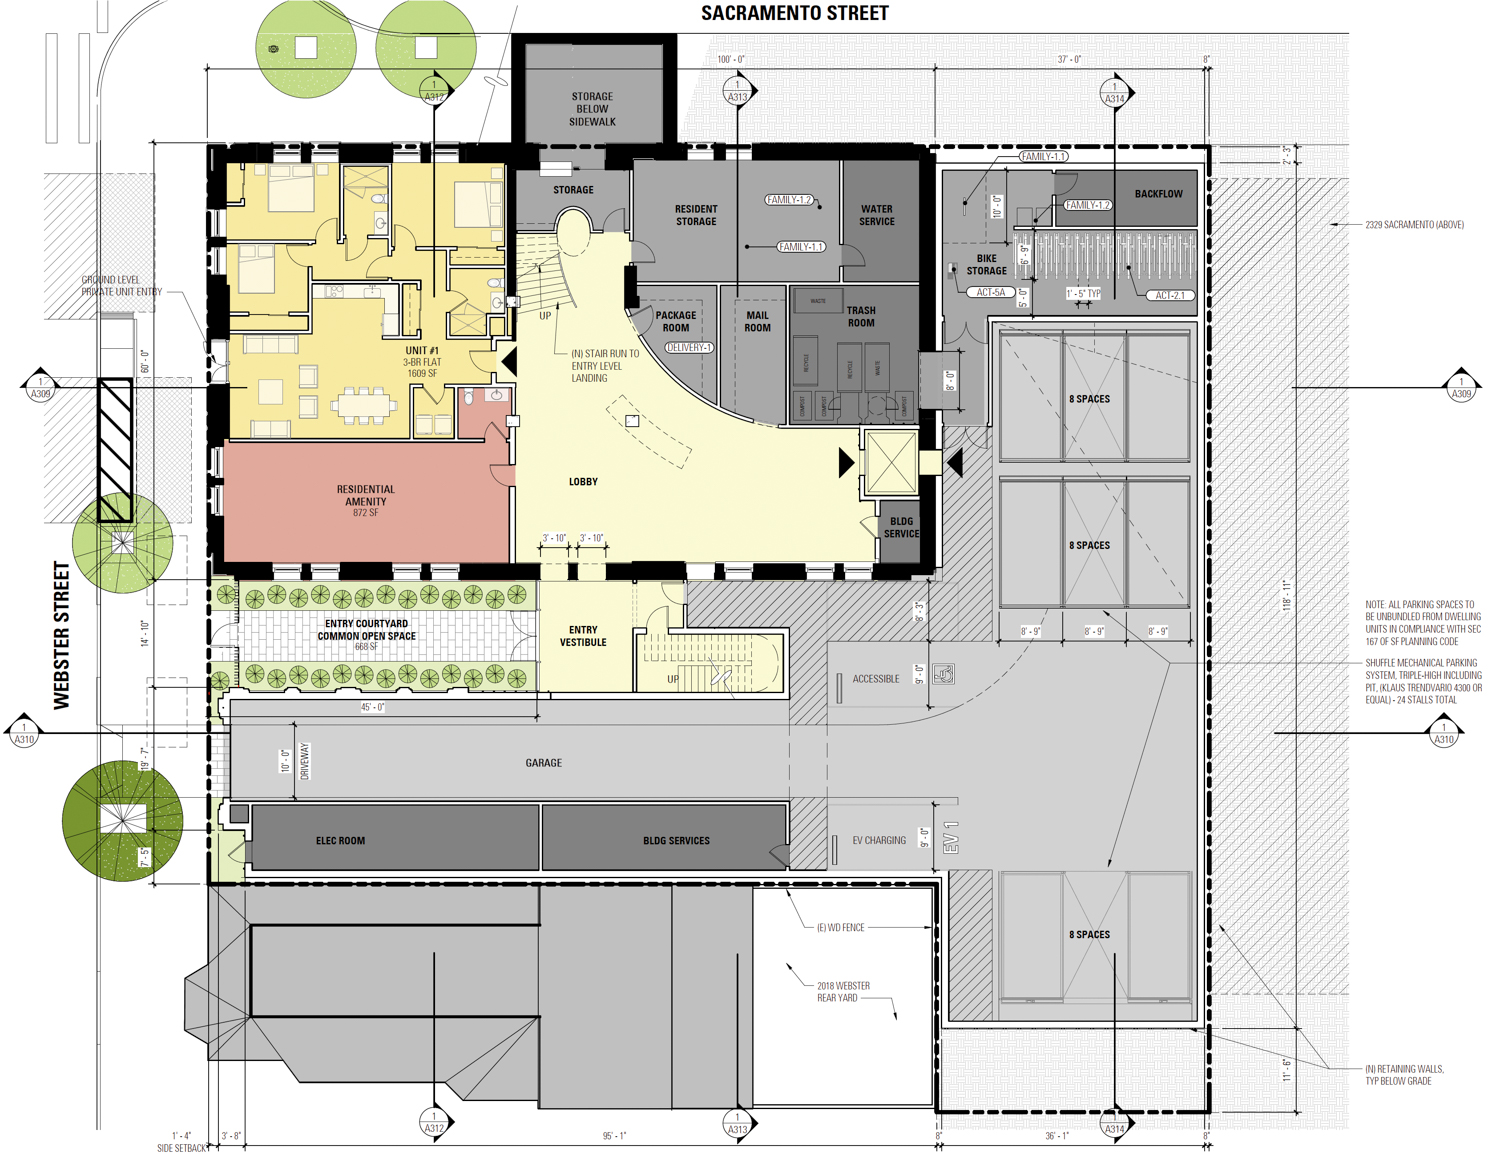 2395 Sacramento Street ground-level floor plan, illustration by BAR Architects